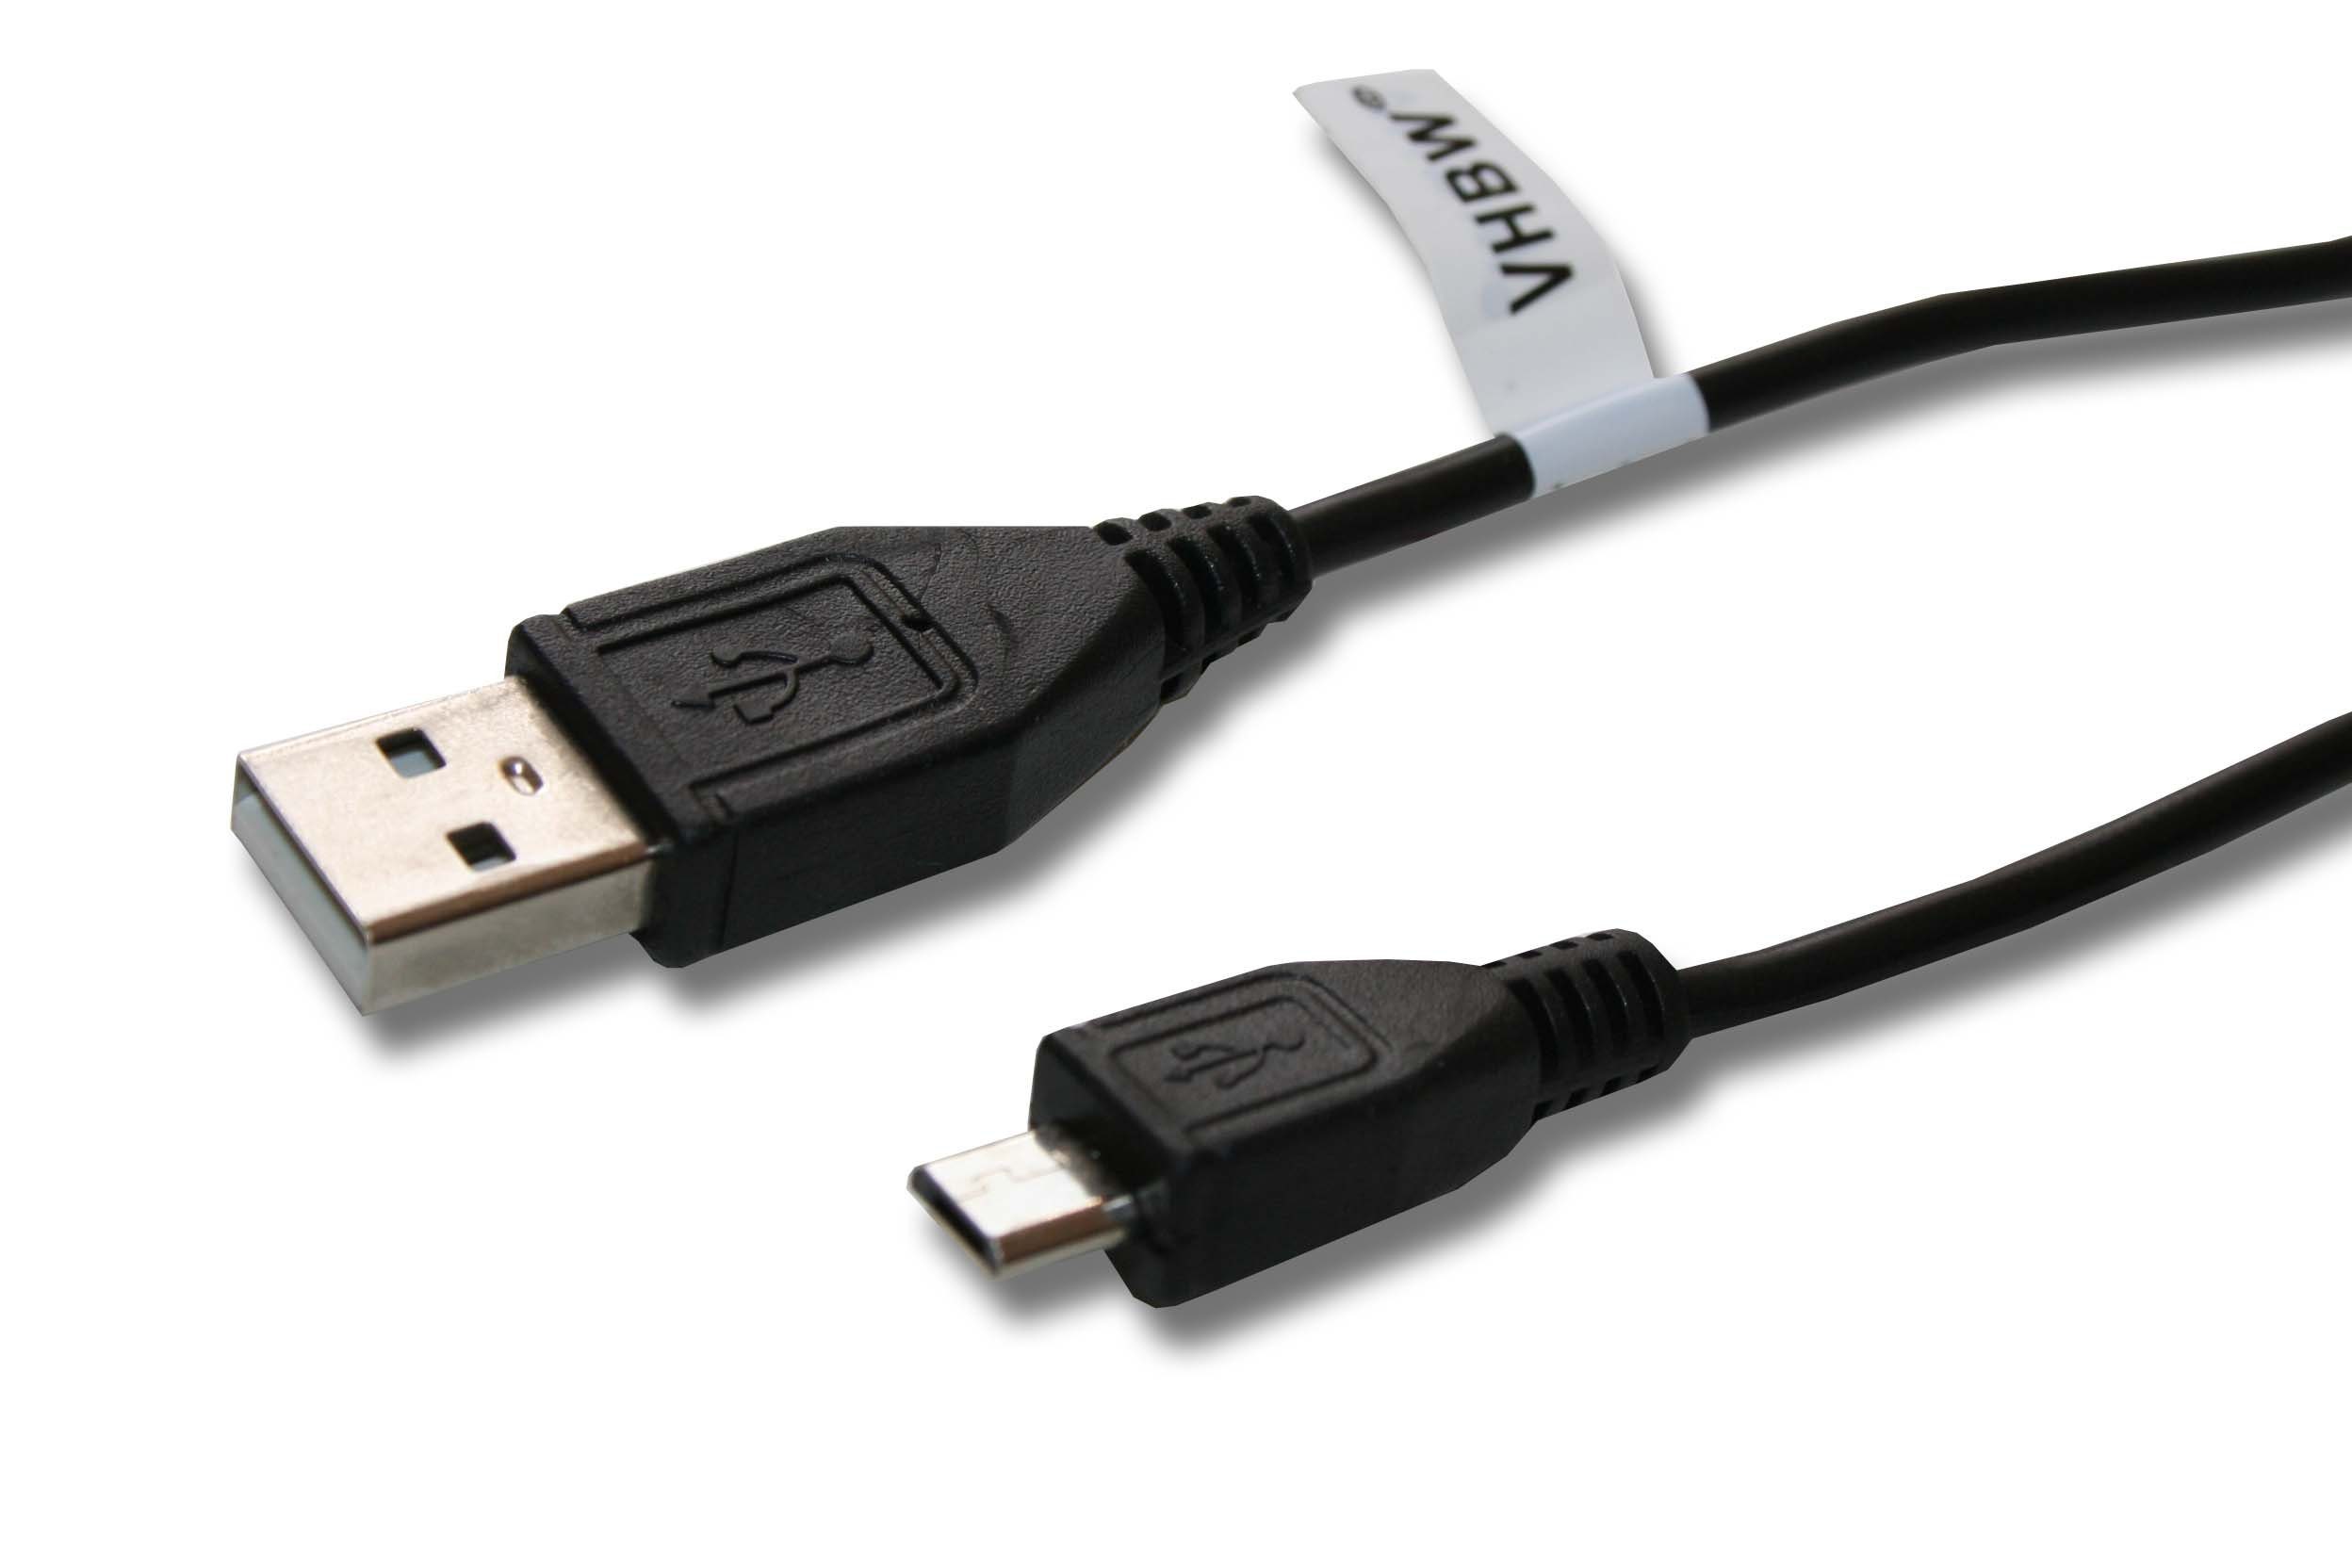 vhbw USB-Kabel, passend für Bea-fon SL320, SL560, SL570, SL340, SL470